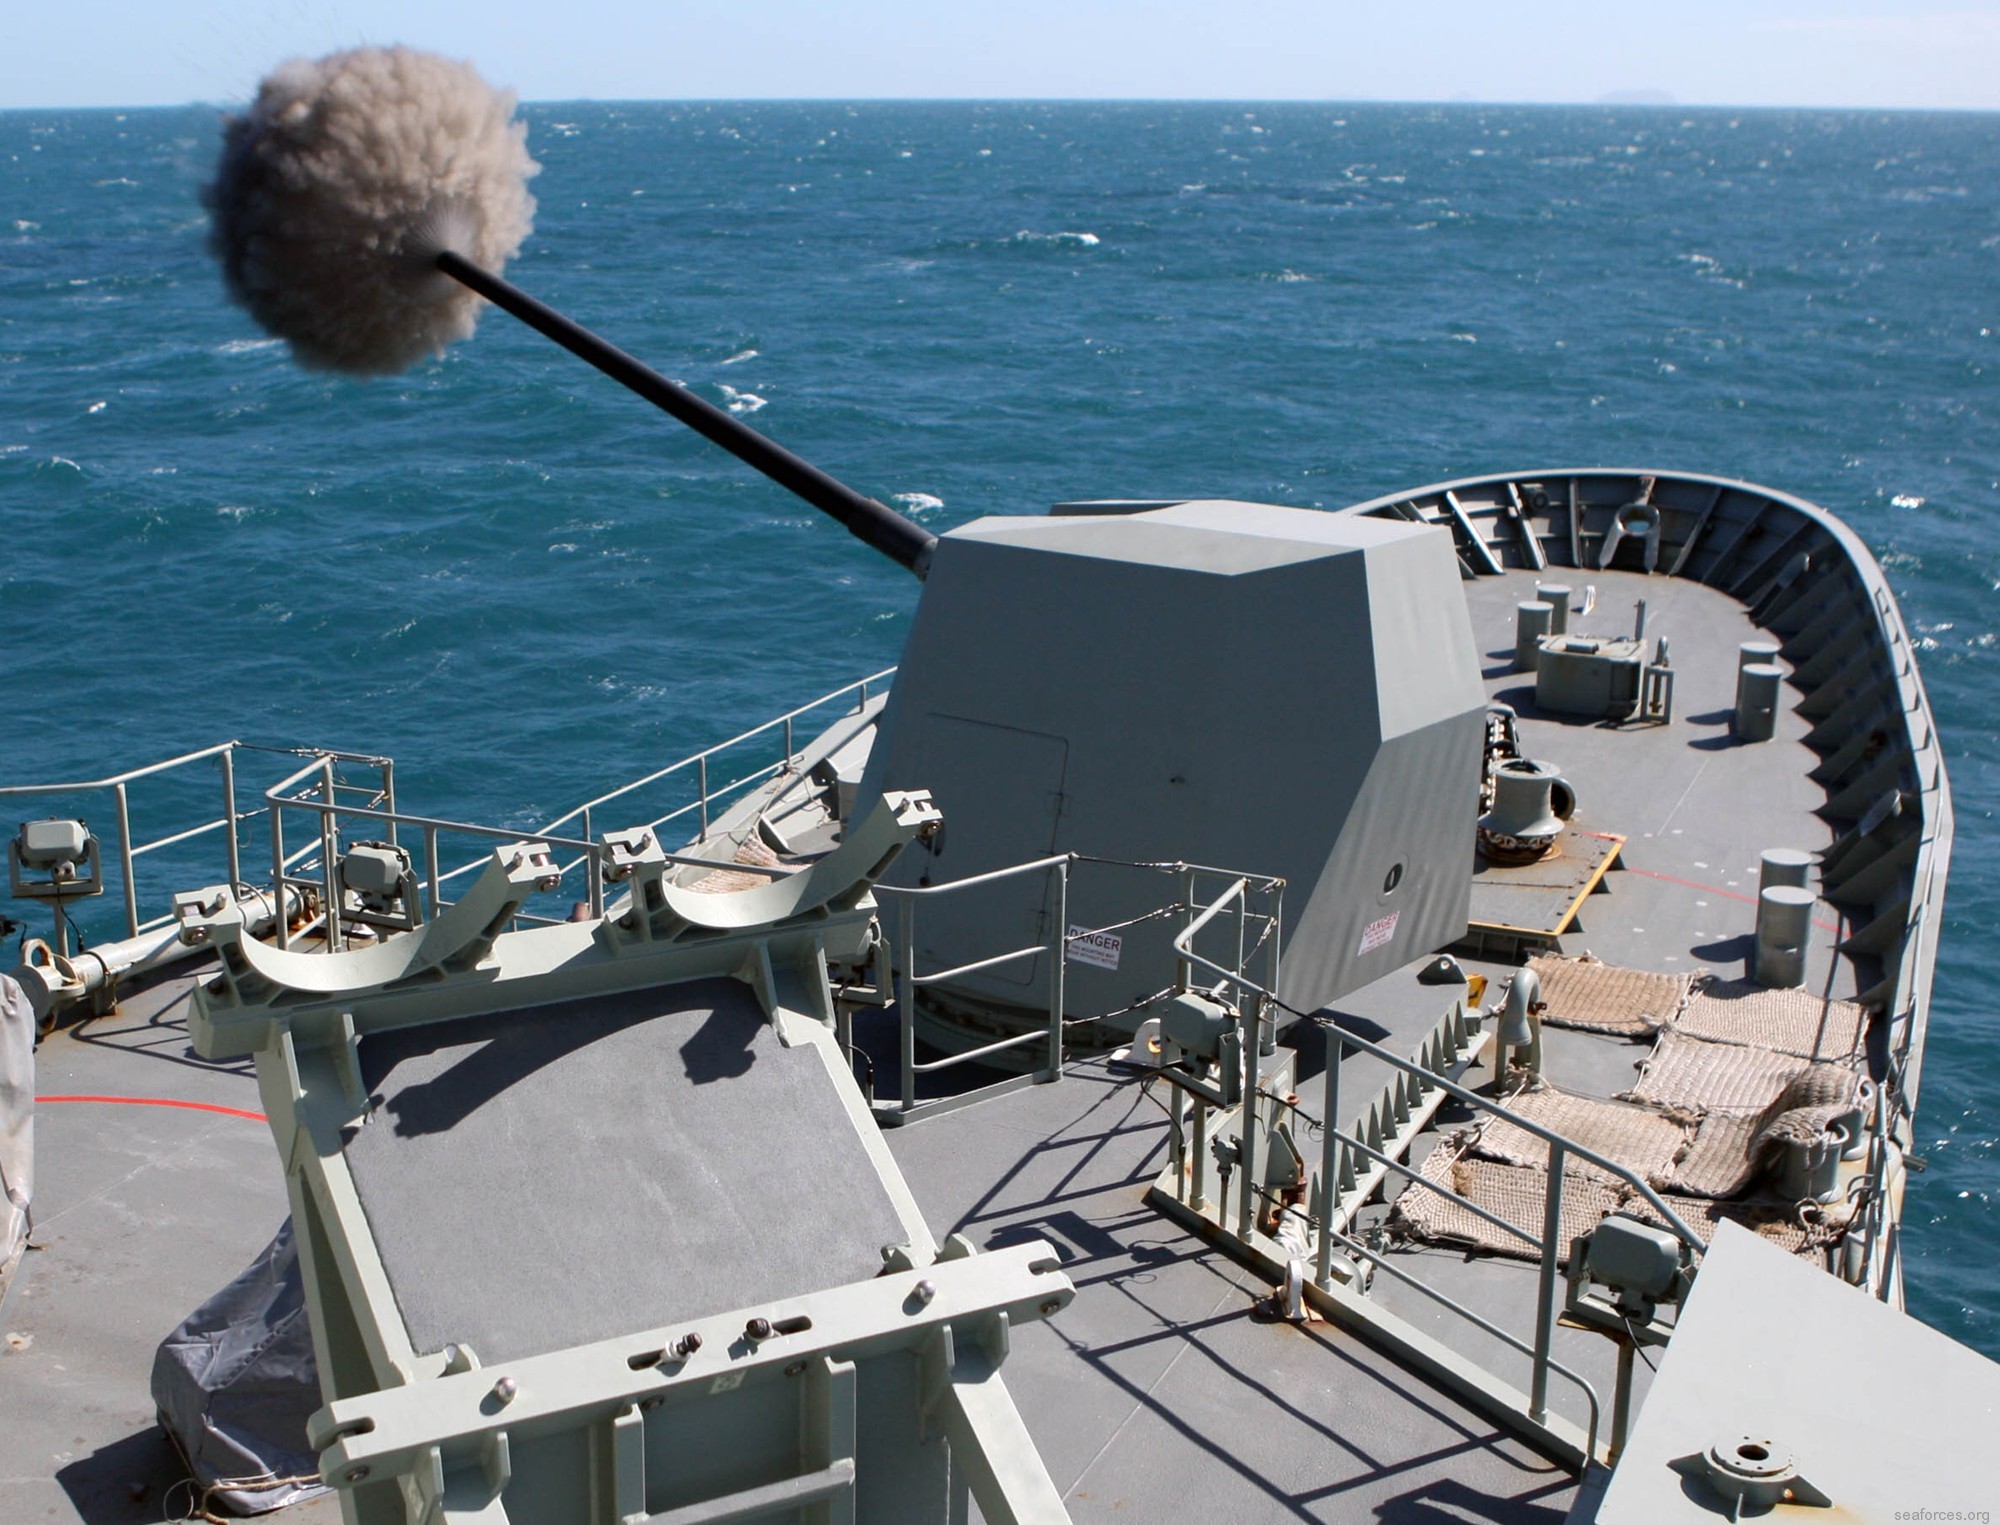 anzac class frigate ffh ffghm royal australian navy mk-45 mod.2 5 inch 54 caliber naval gun system